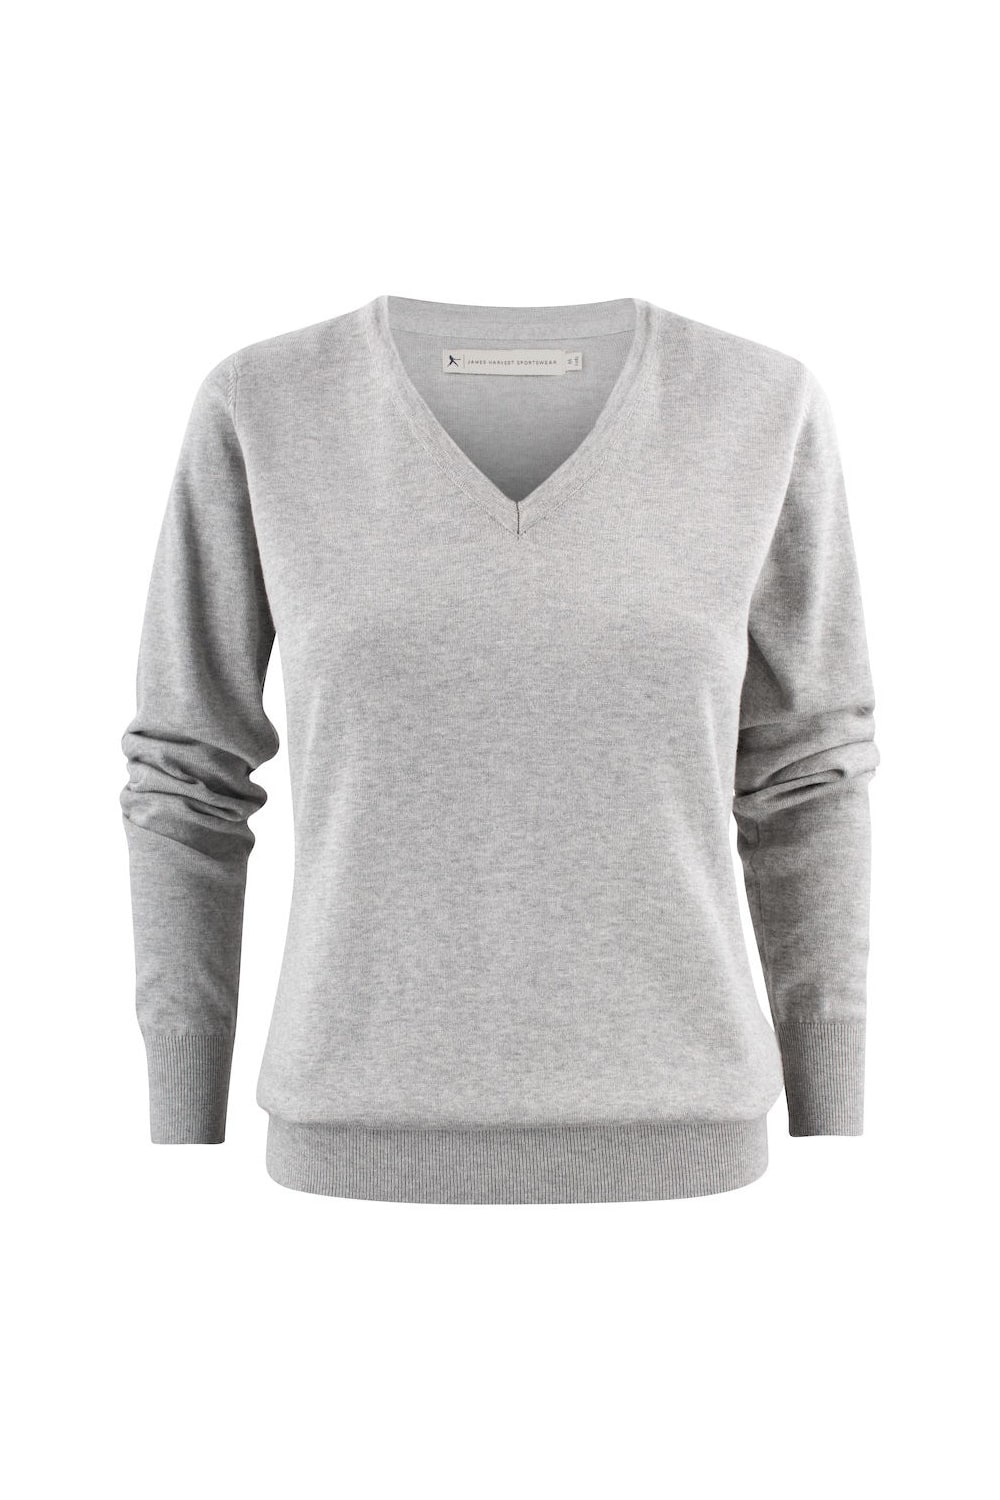 James Harvest Womens/Ladies Ashland V Neck Sweatshirt (Grey Melange)